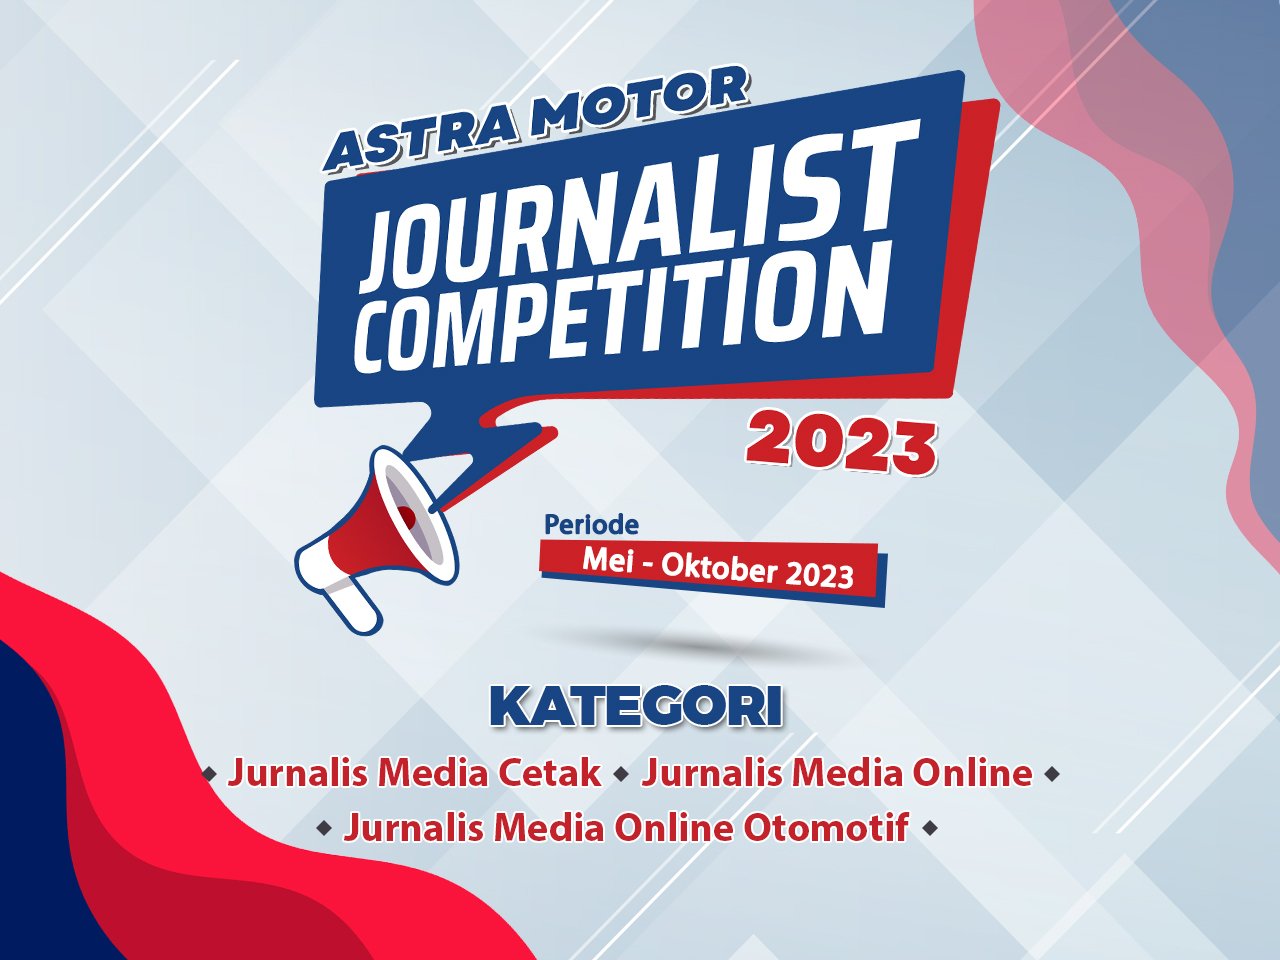 Registrasi Astra Motor Yogyakarta Journalist Competition 2023